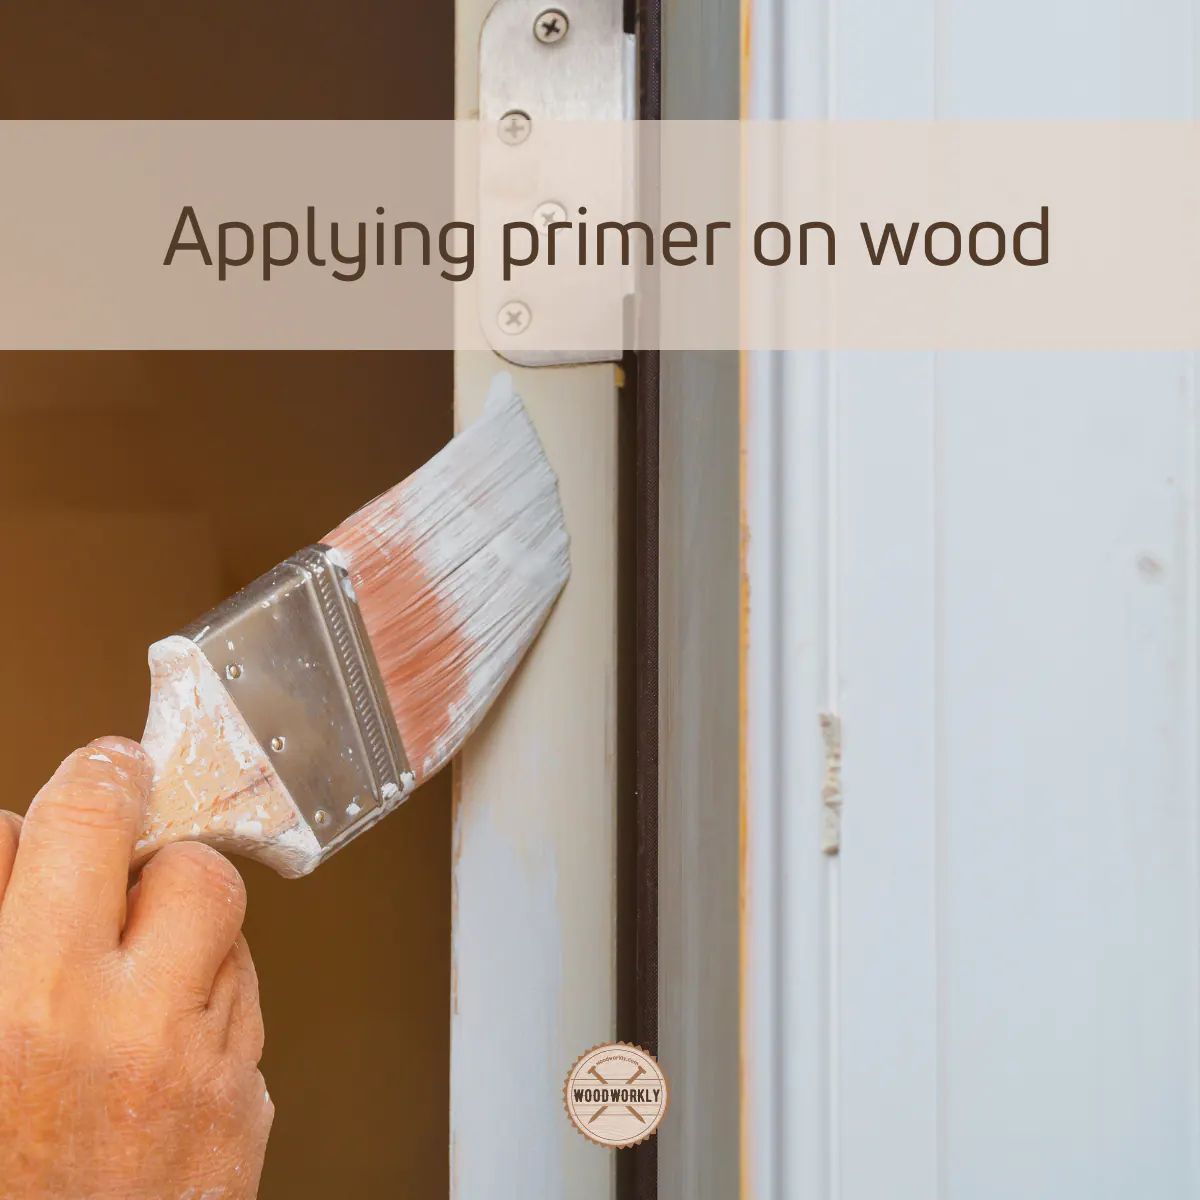 Applying primer on wood